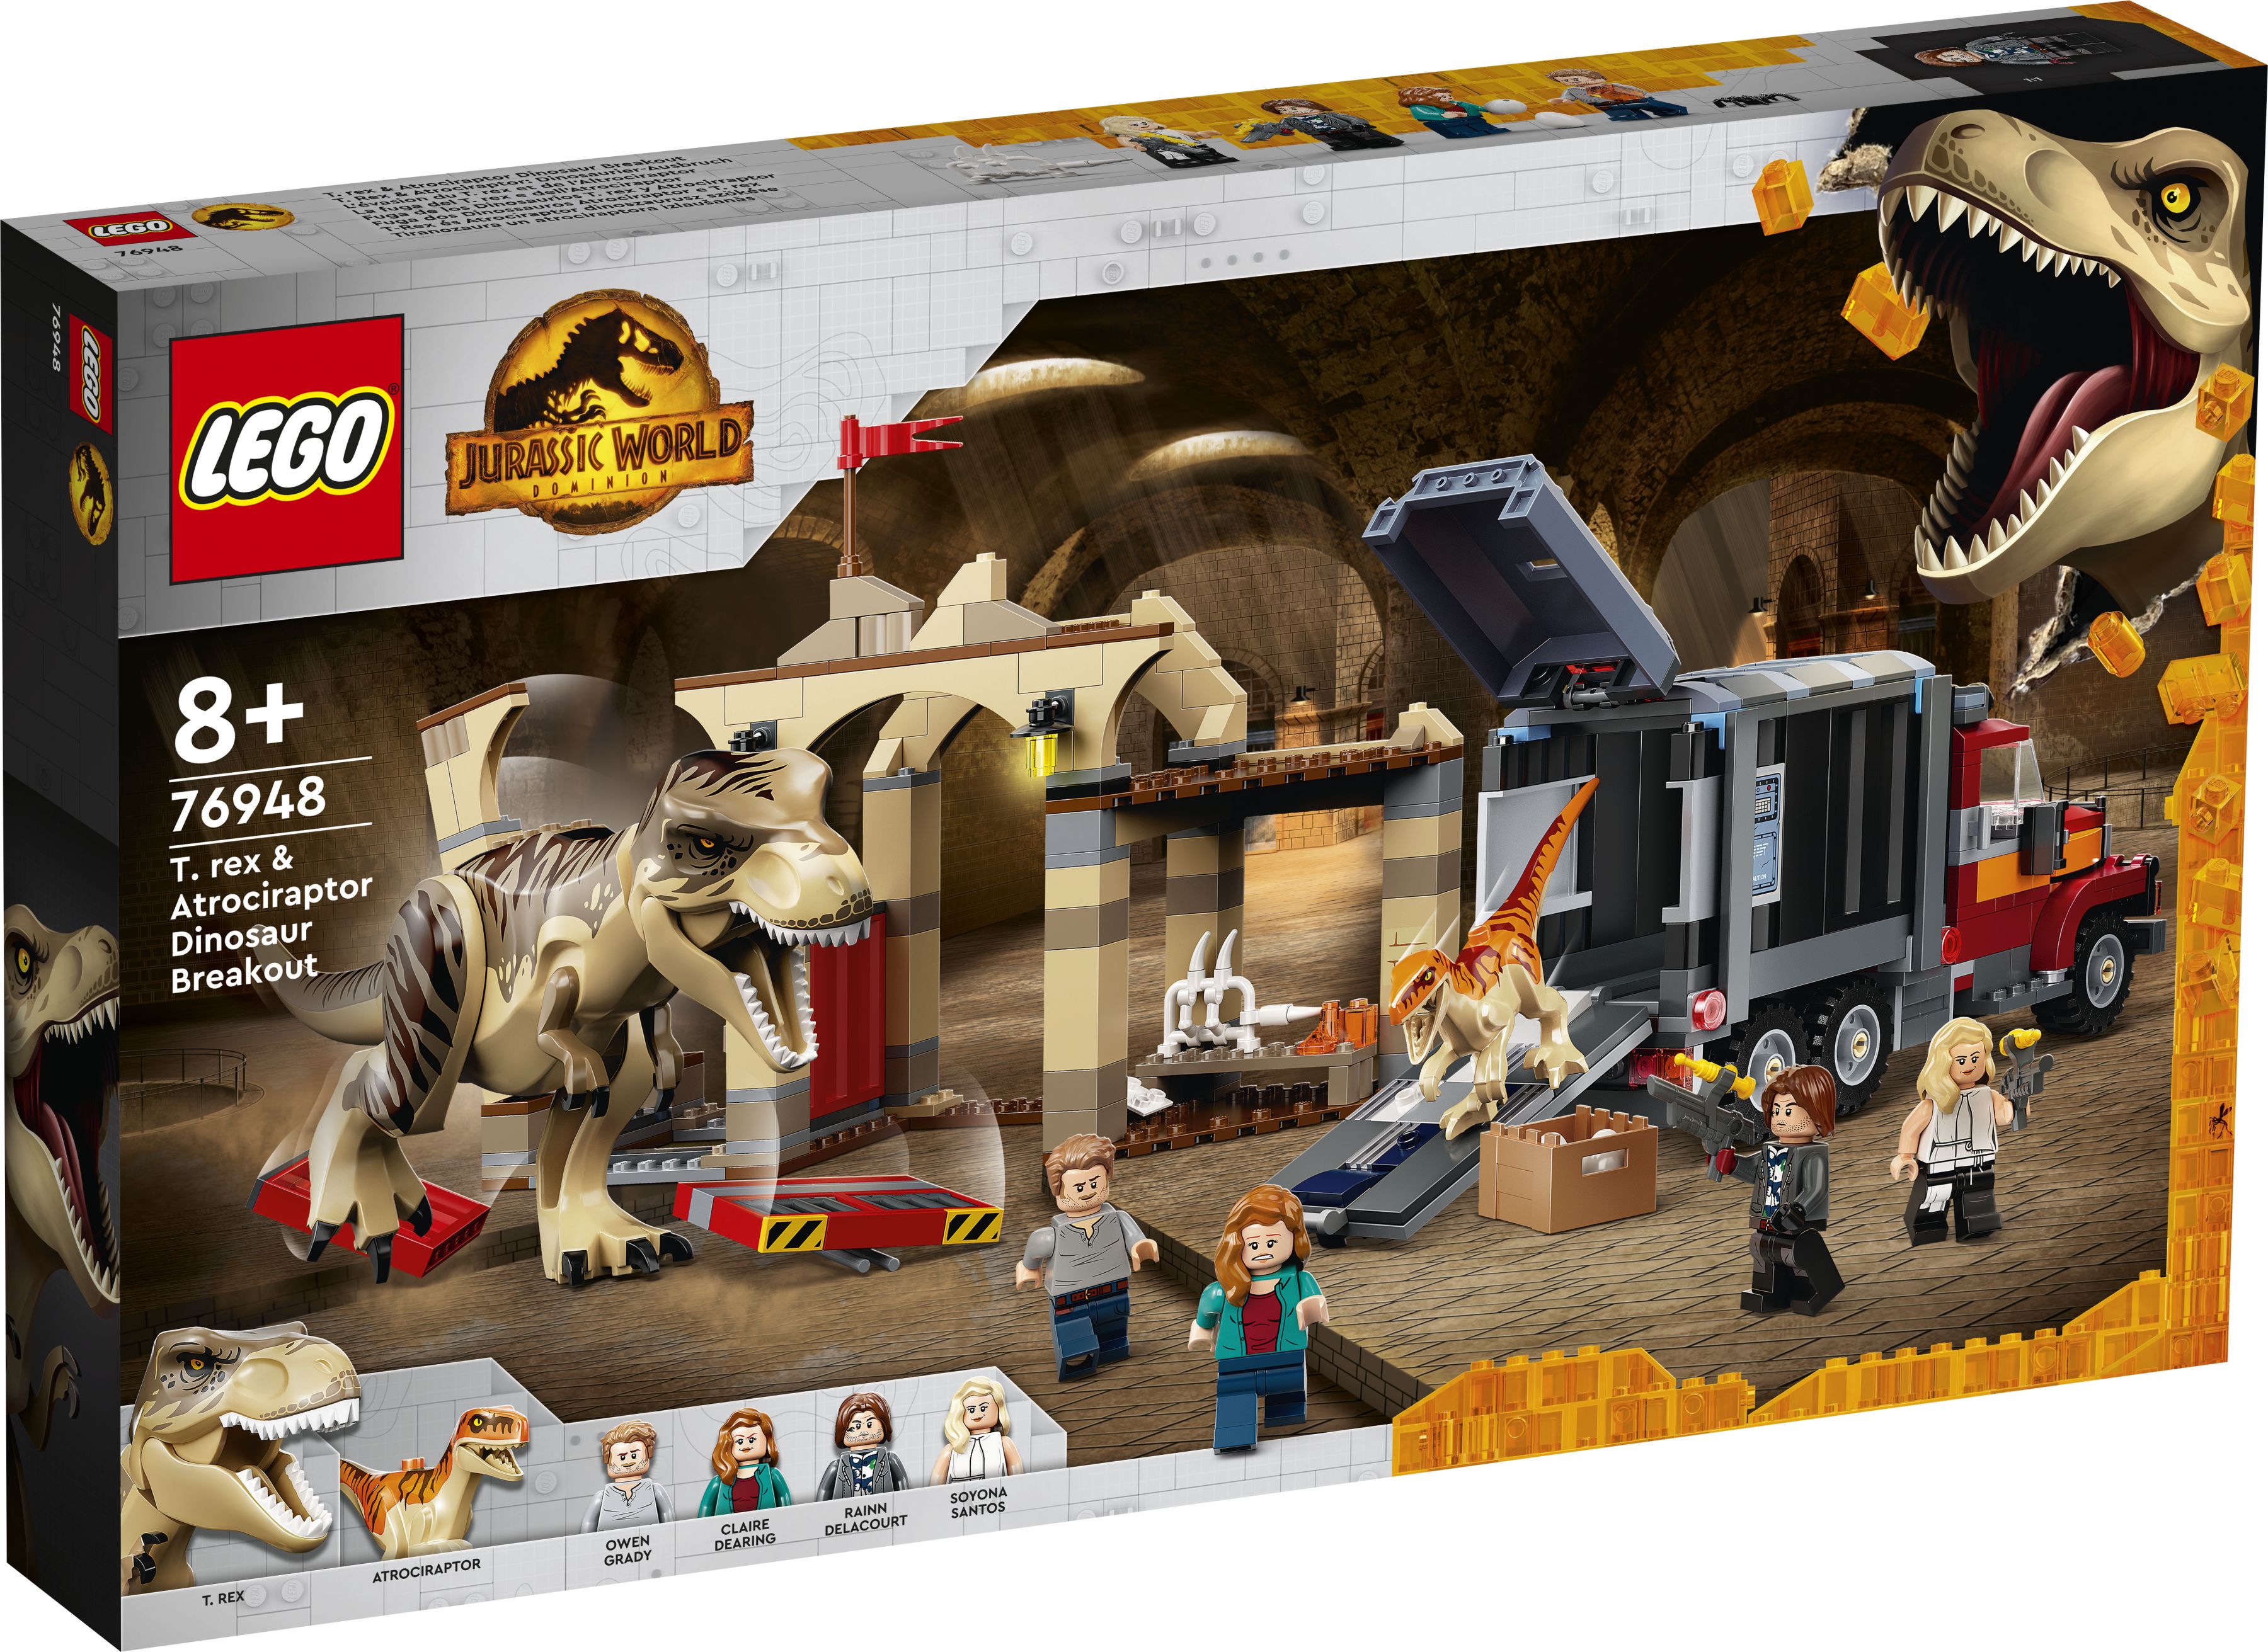 LEGO Jurassic World 76948 T. Rex & Atrociraptor: Dinosaurier-Ausbruch LEGO_76948_Box1_v29.jpg